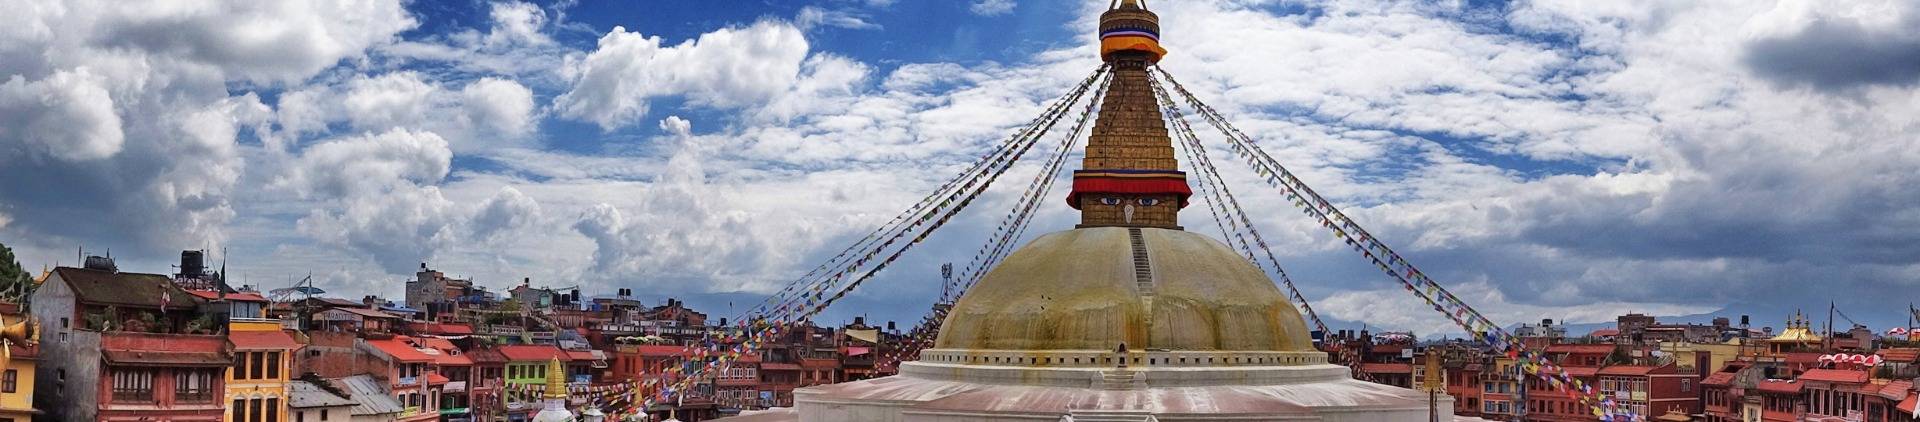 Highway to Himalaya: Chaotic days in Kathmandu 